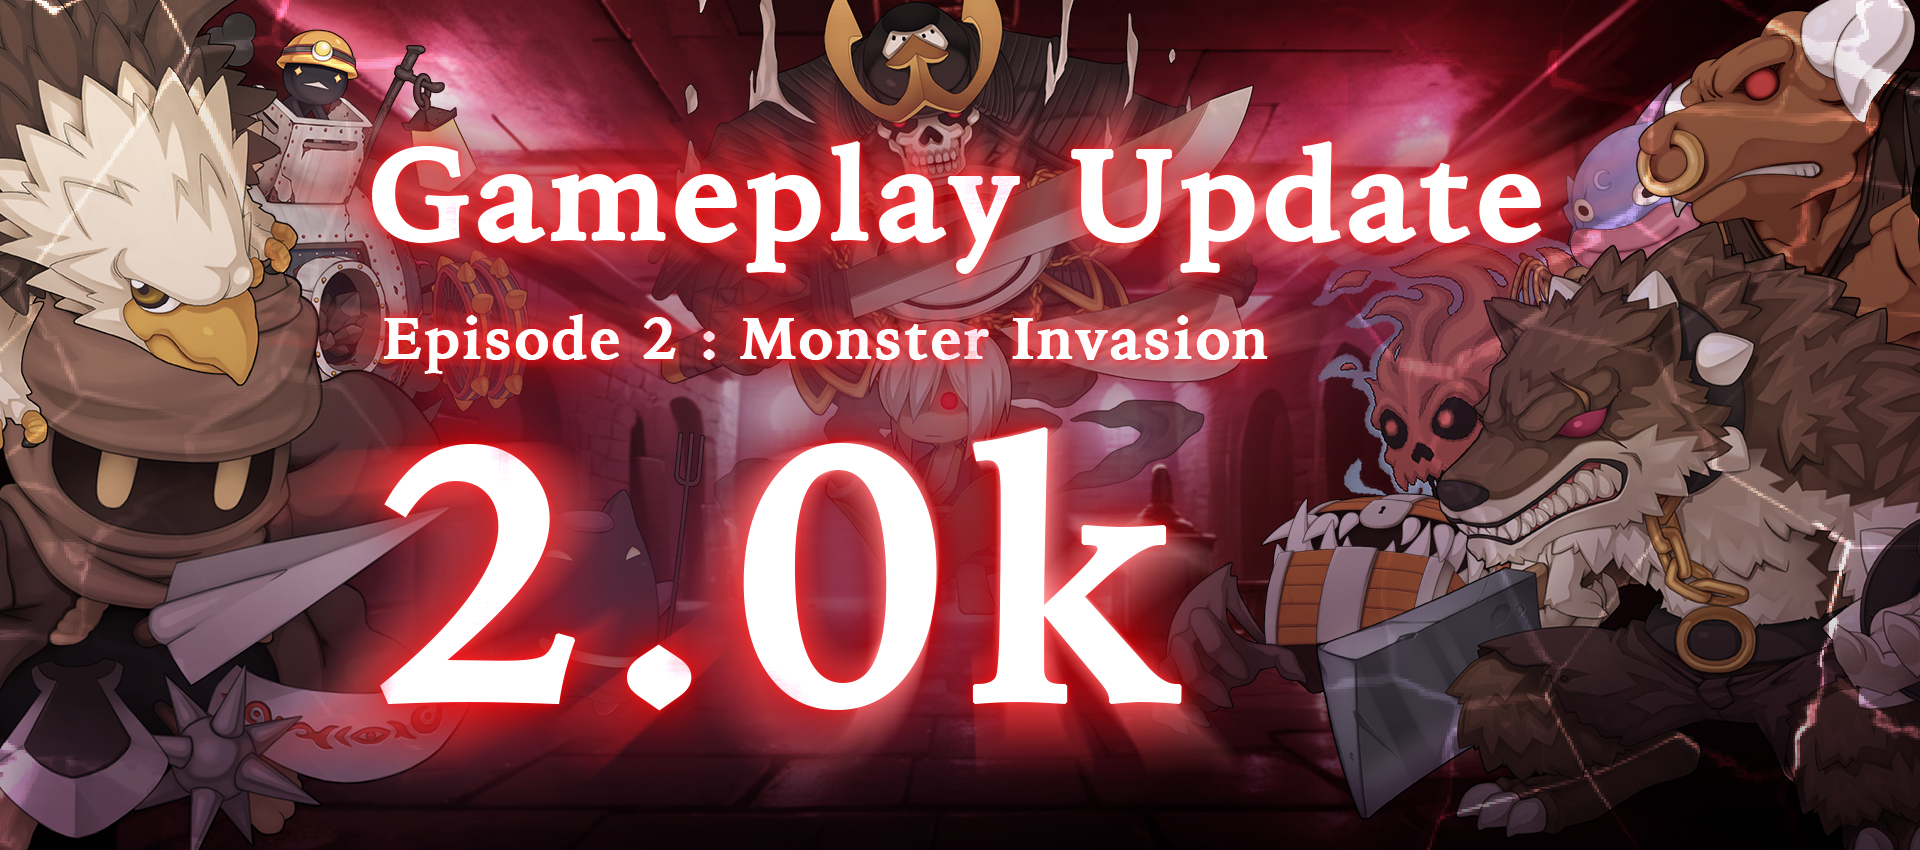 Gameplay Update 2.0K : Monster Invasion